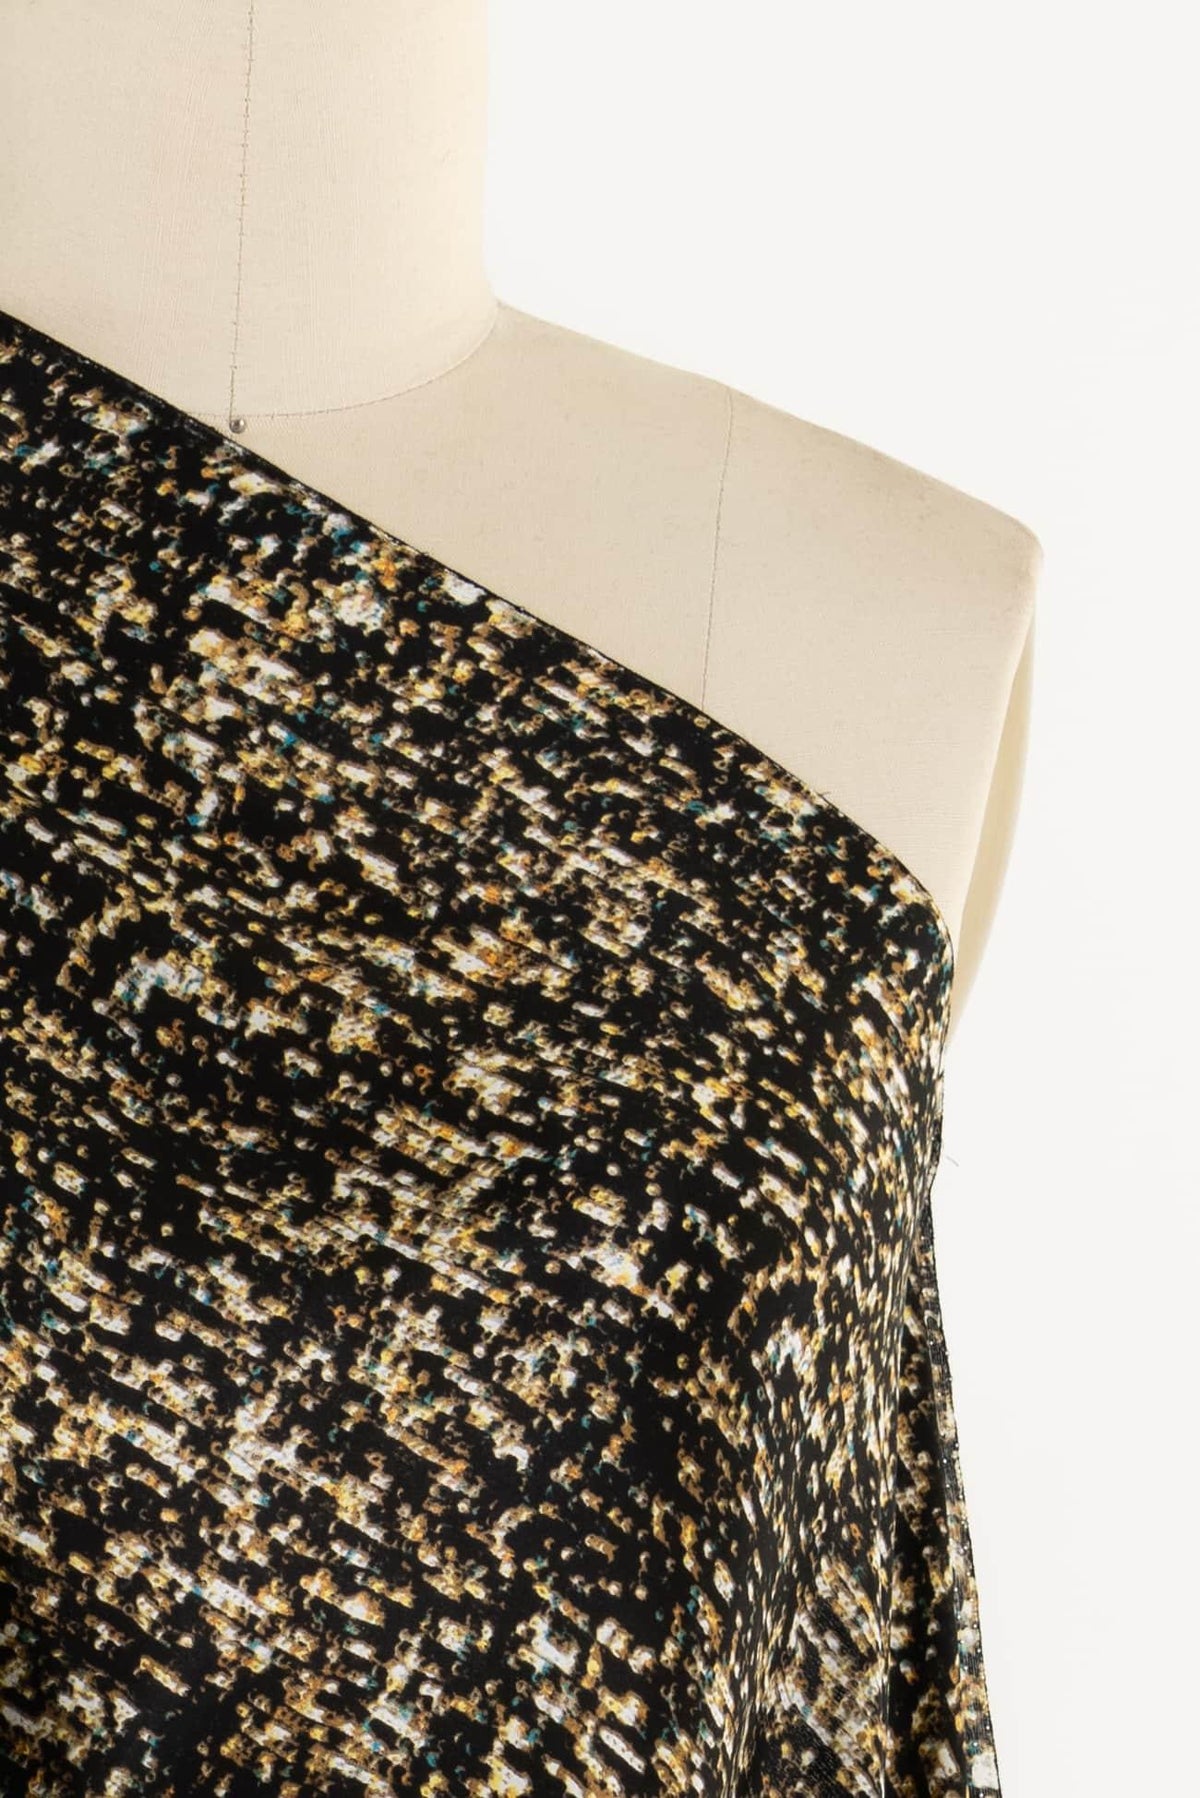 Faux Sequins Silk Woven - Marcy Tilton Fabrics